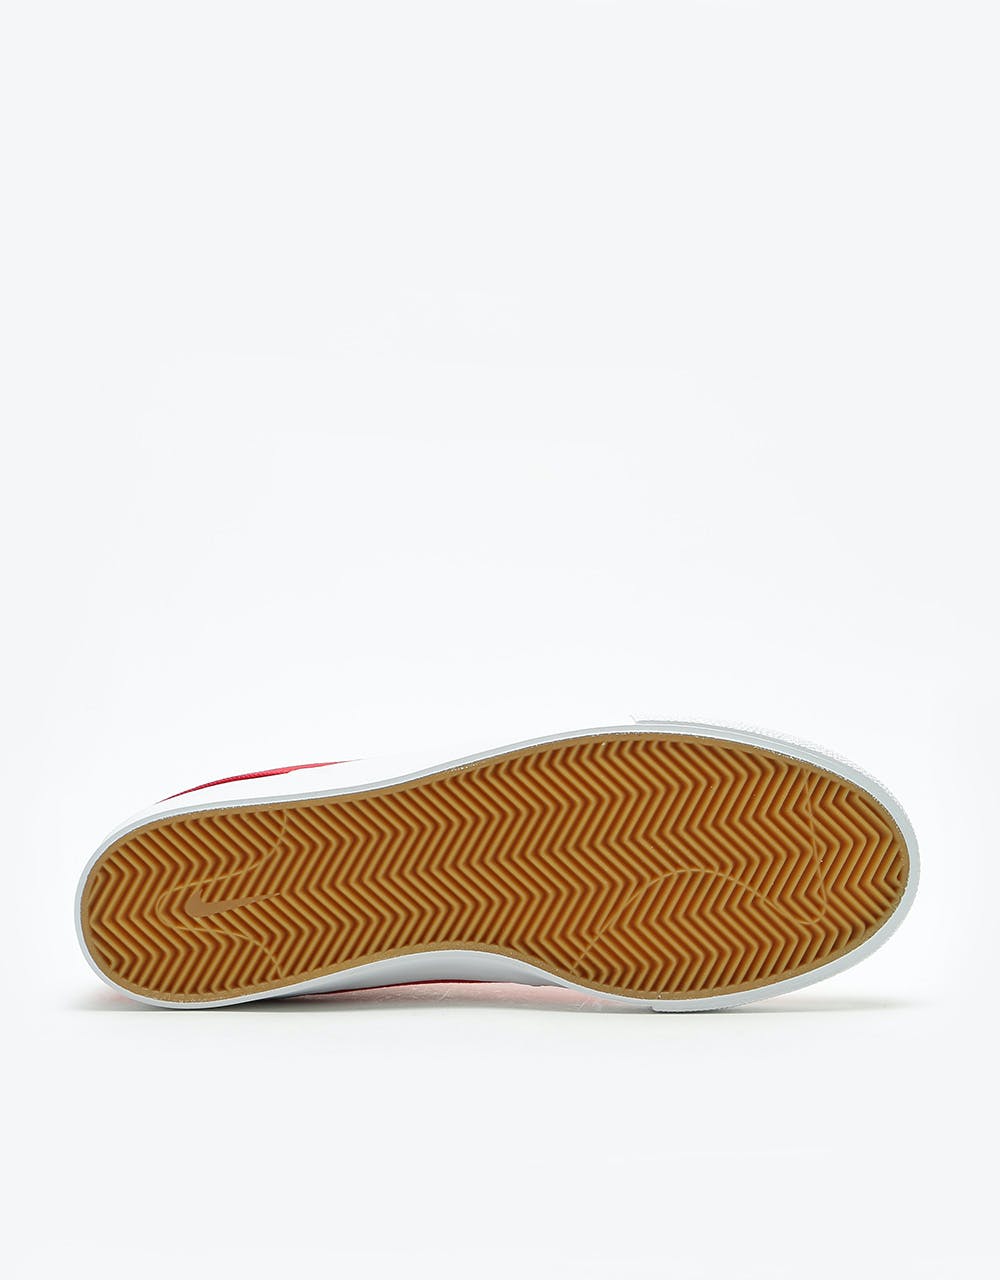 Nike SB Zoom Stefan Janoski Canvas RM Skate Shoes - University Red/Clu